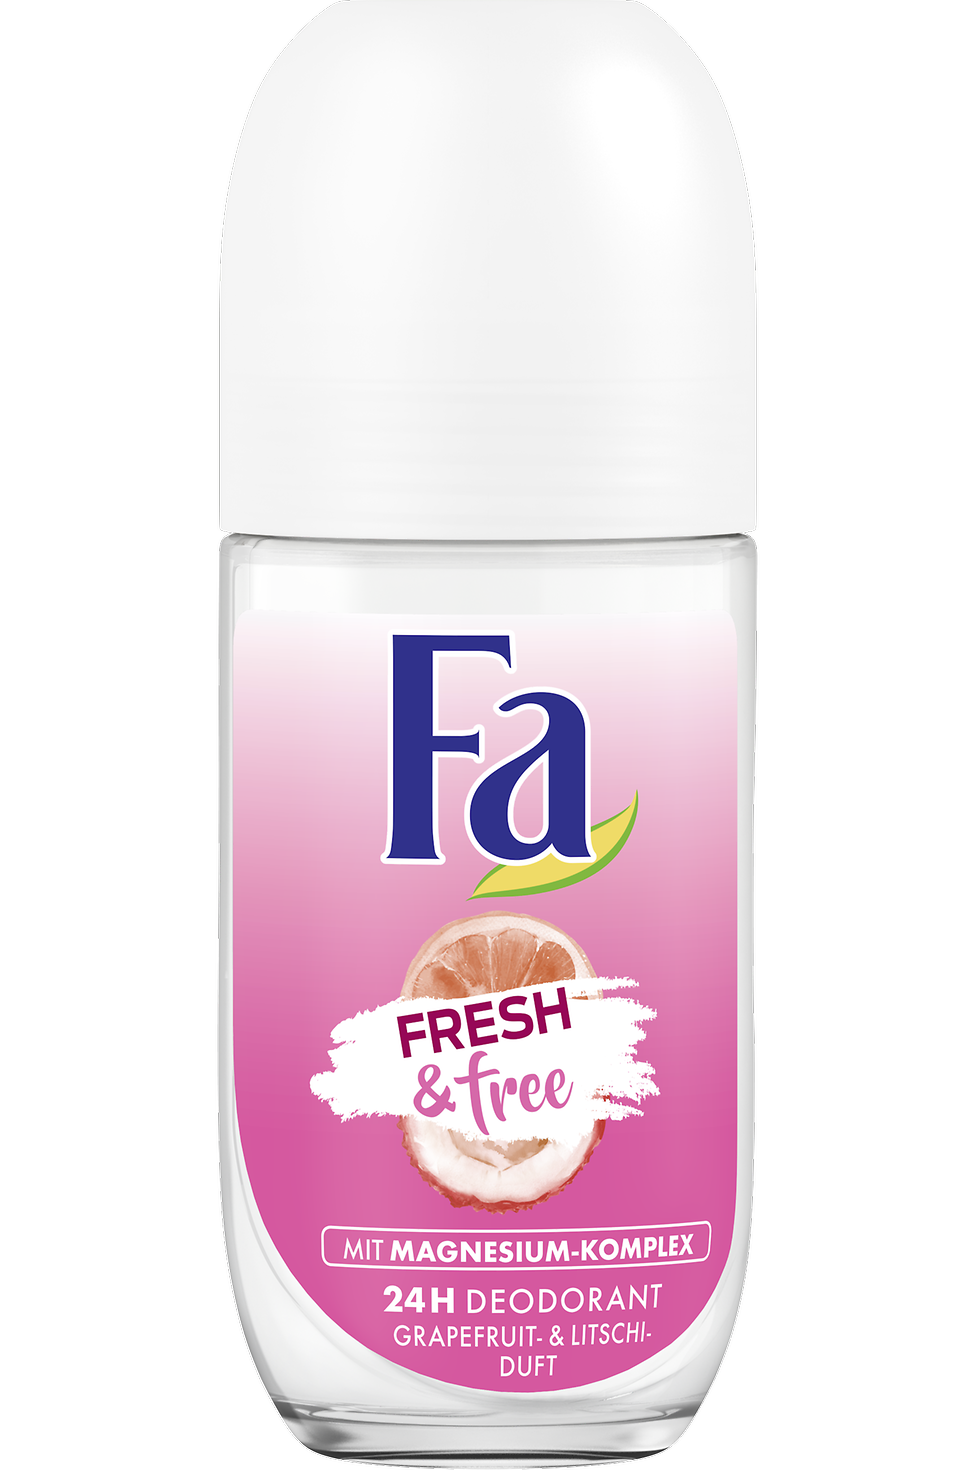 Fa Fresh & free Grapefruit- und Litschi-Duft, 24 H Deodorant, Roll-On